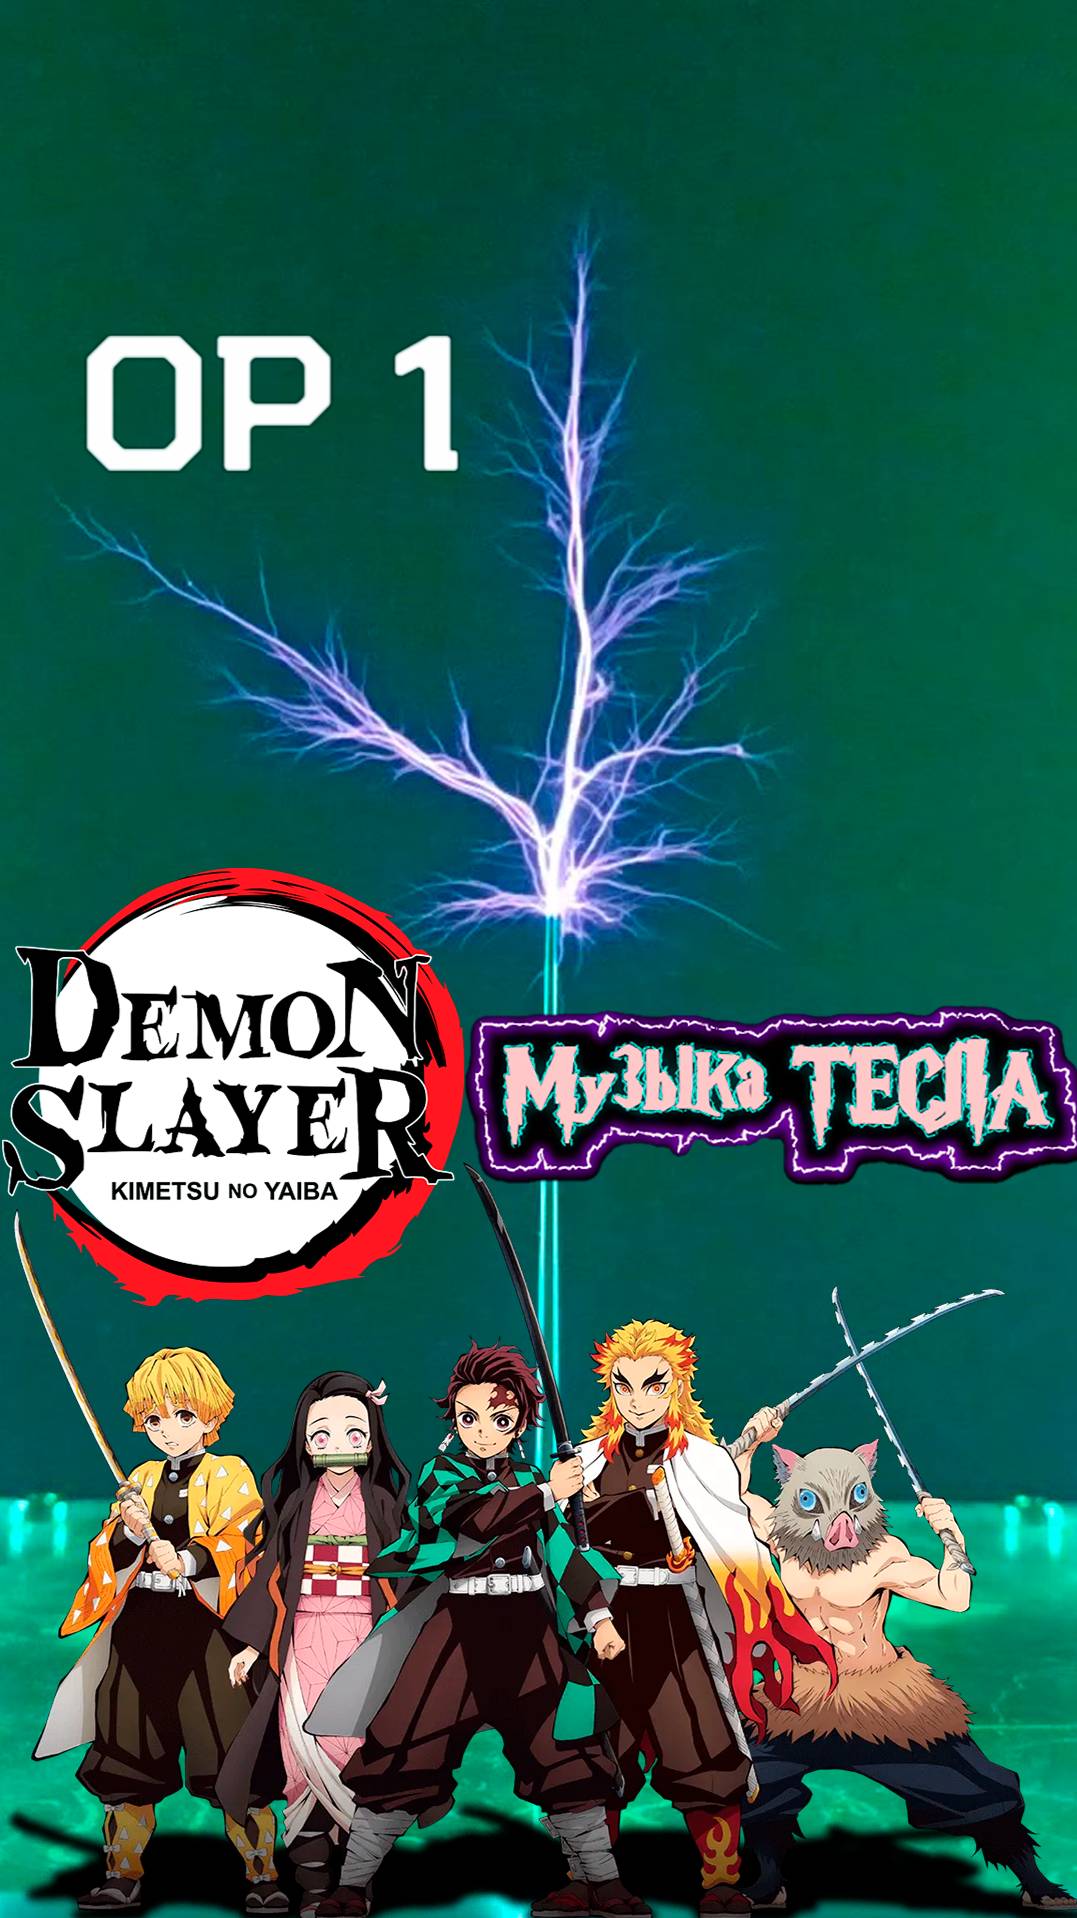 Kimetsu no Yaiba Demon Slayer OP 1 Tesla Coil Mix #музыкатесла